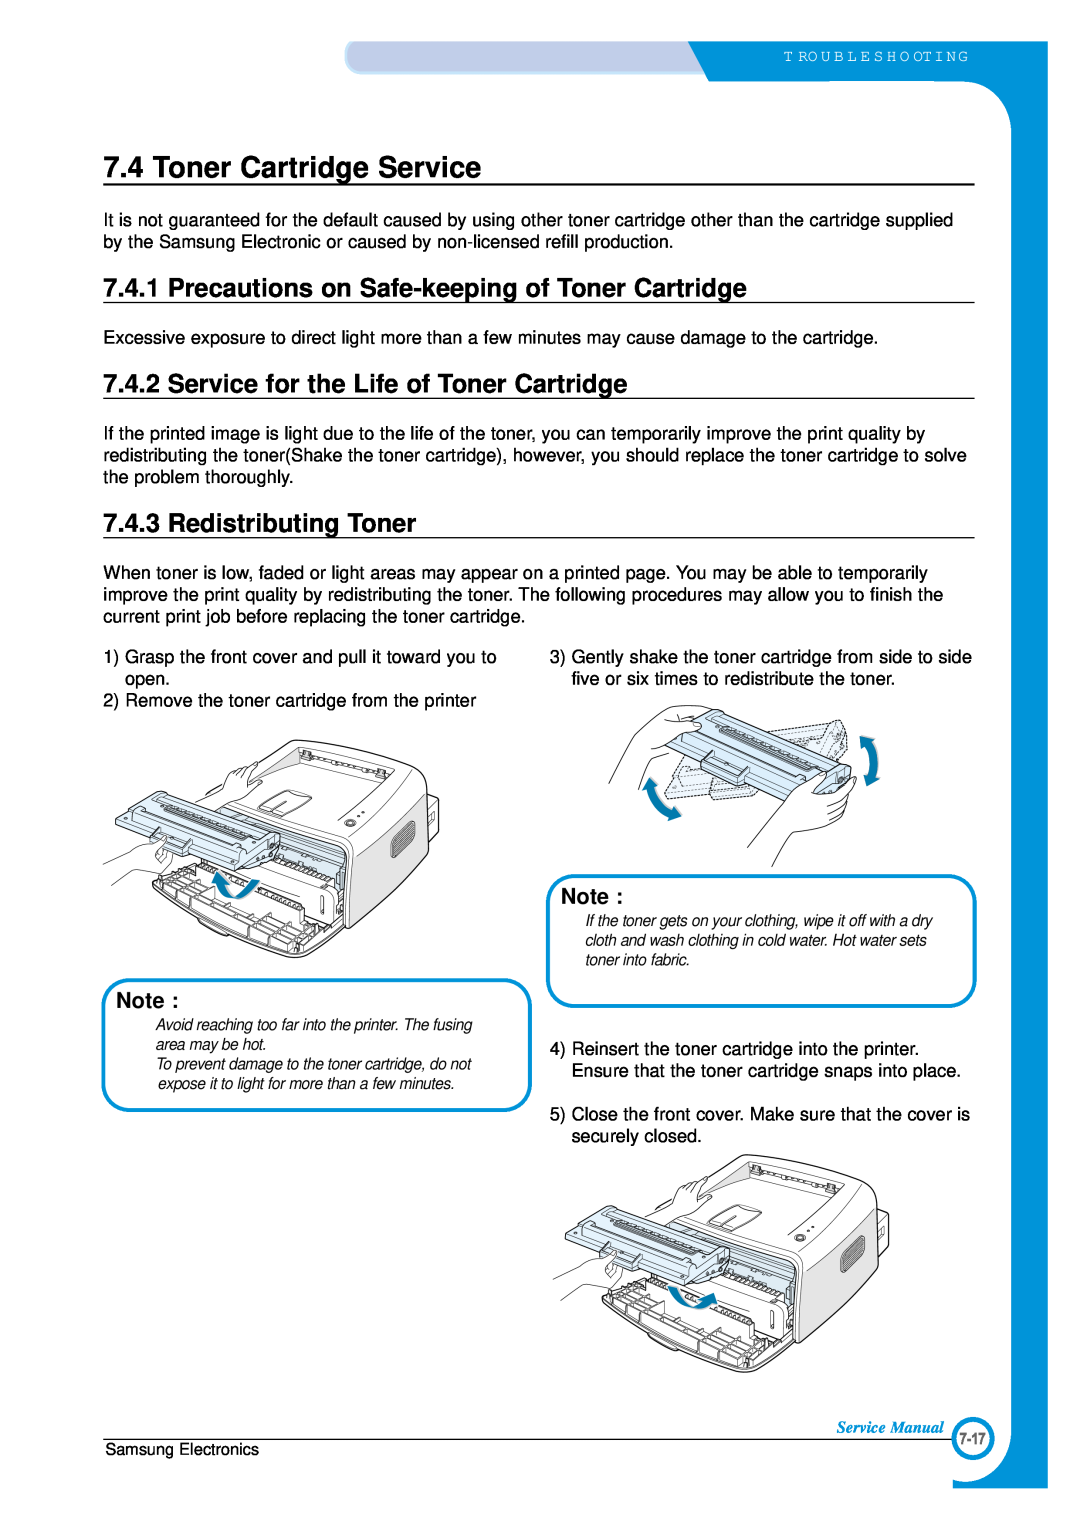 Samsung ML-1700 Toner Cartridge Service, Precautions on Safe-keeping of Toner Cartridge, Redistributing Toner 